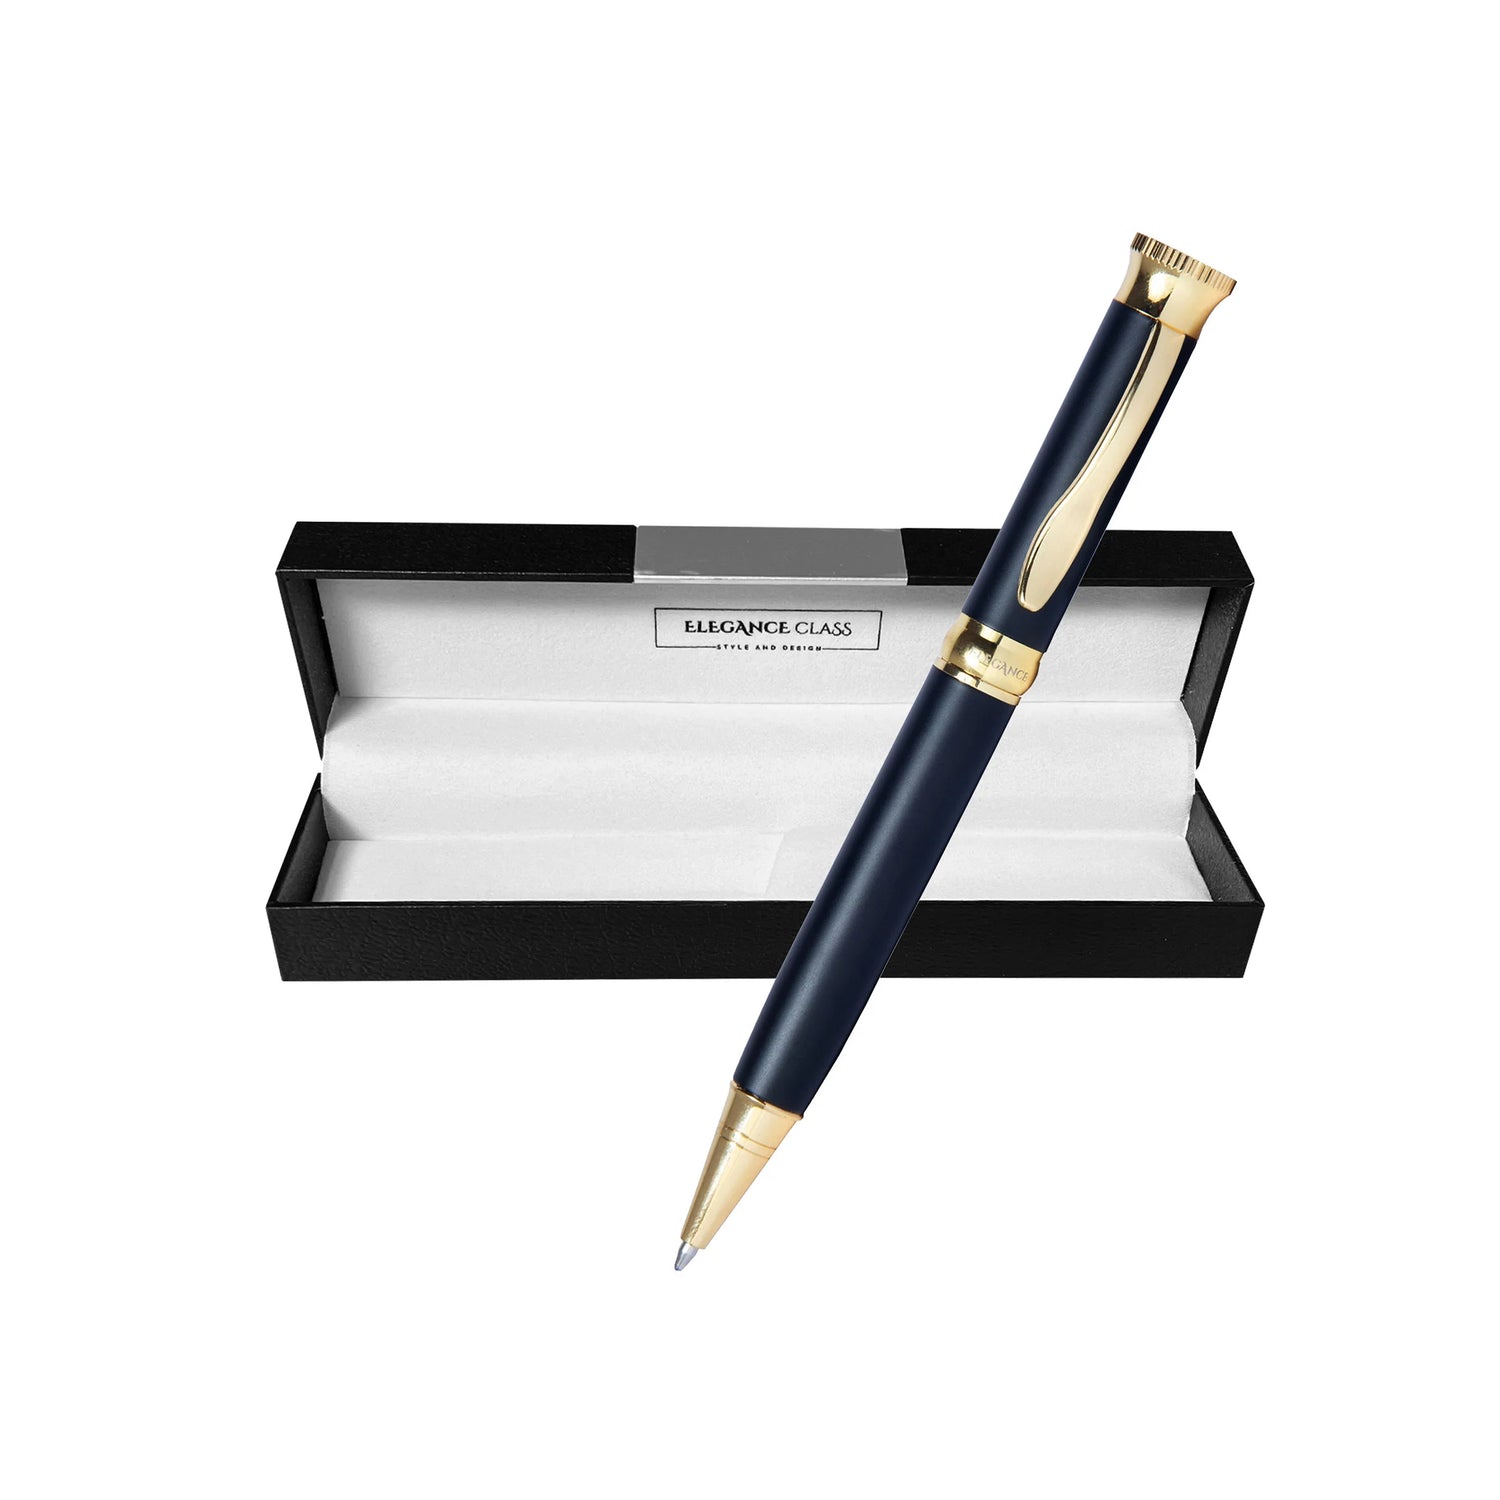 Bolígrafo Modelo Executive Black GT + Grabado Personalizado